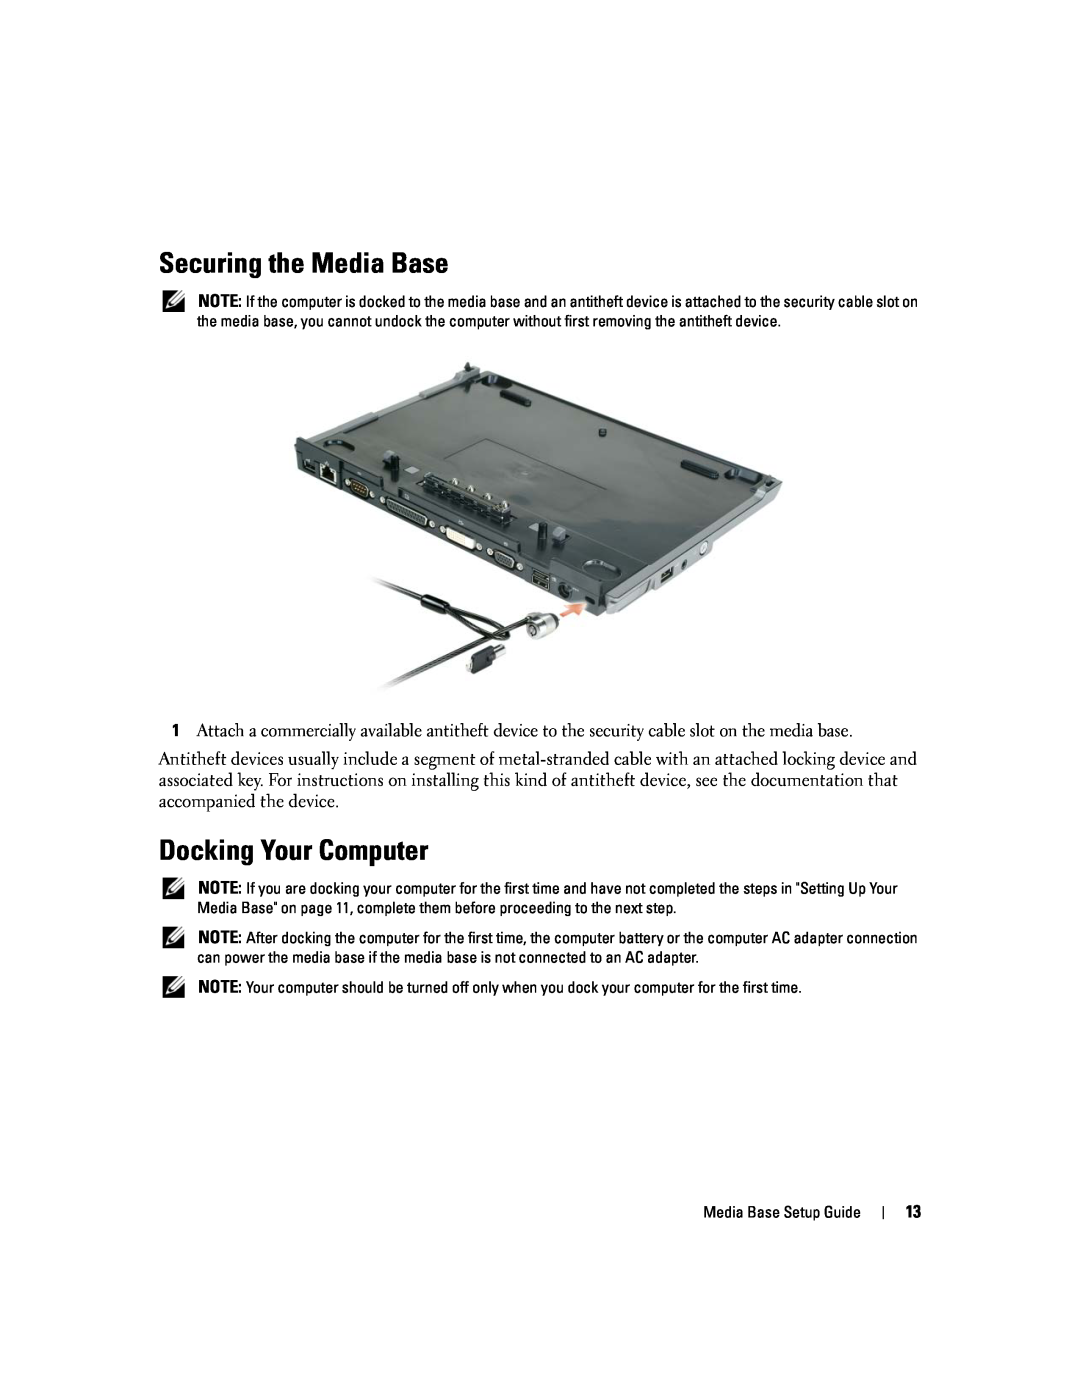 Dell Model PR09S setup guide Securing the Media Base, Docking Your Computer 